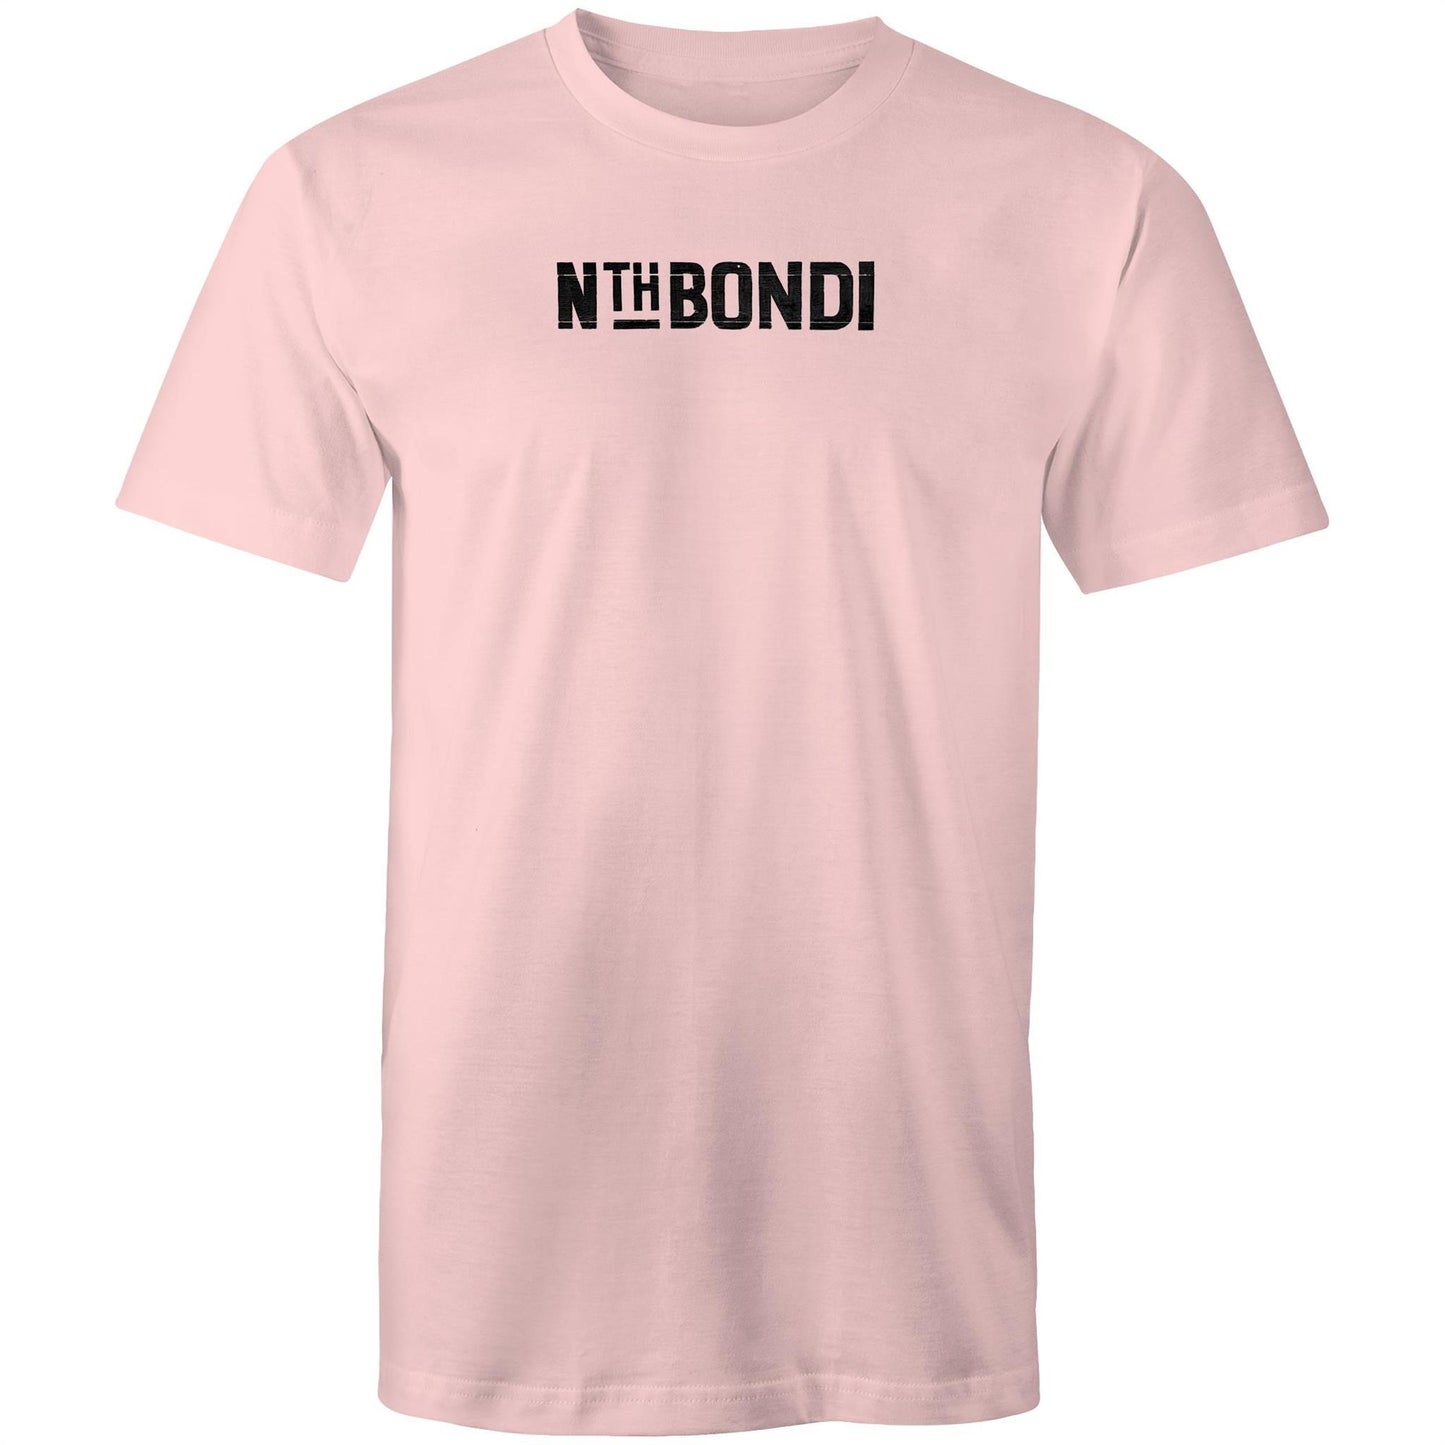 Nth BONDI T Shirts for Men (Unisex)